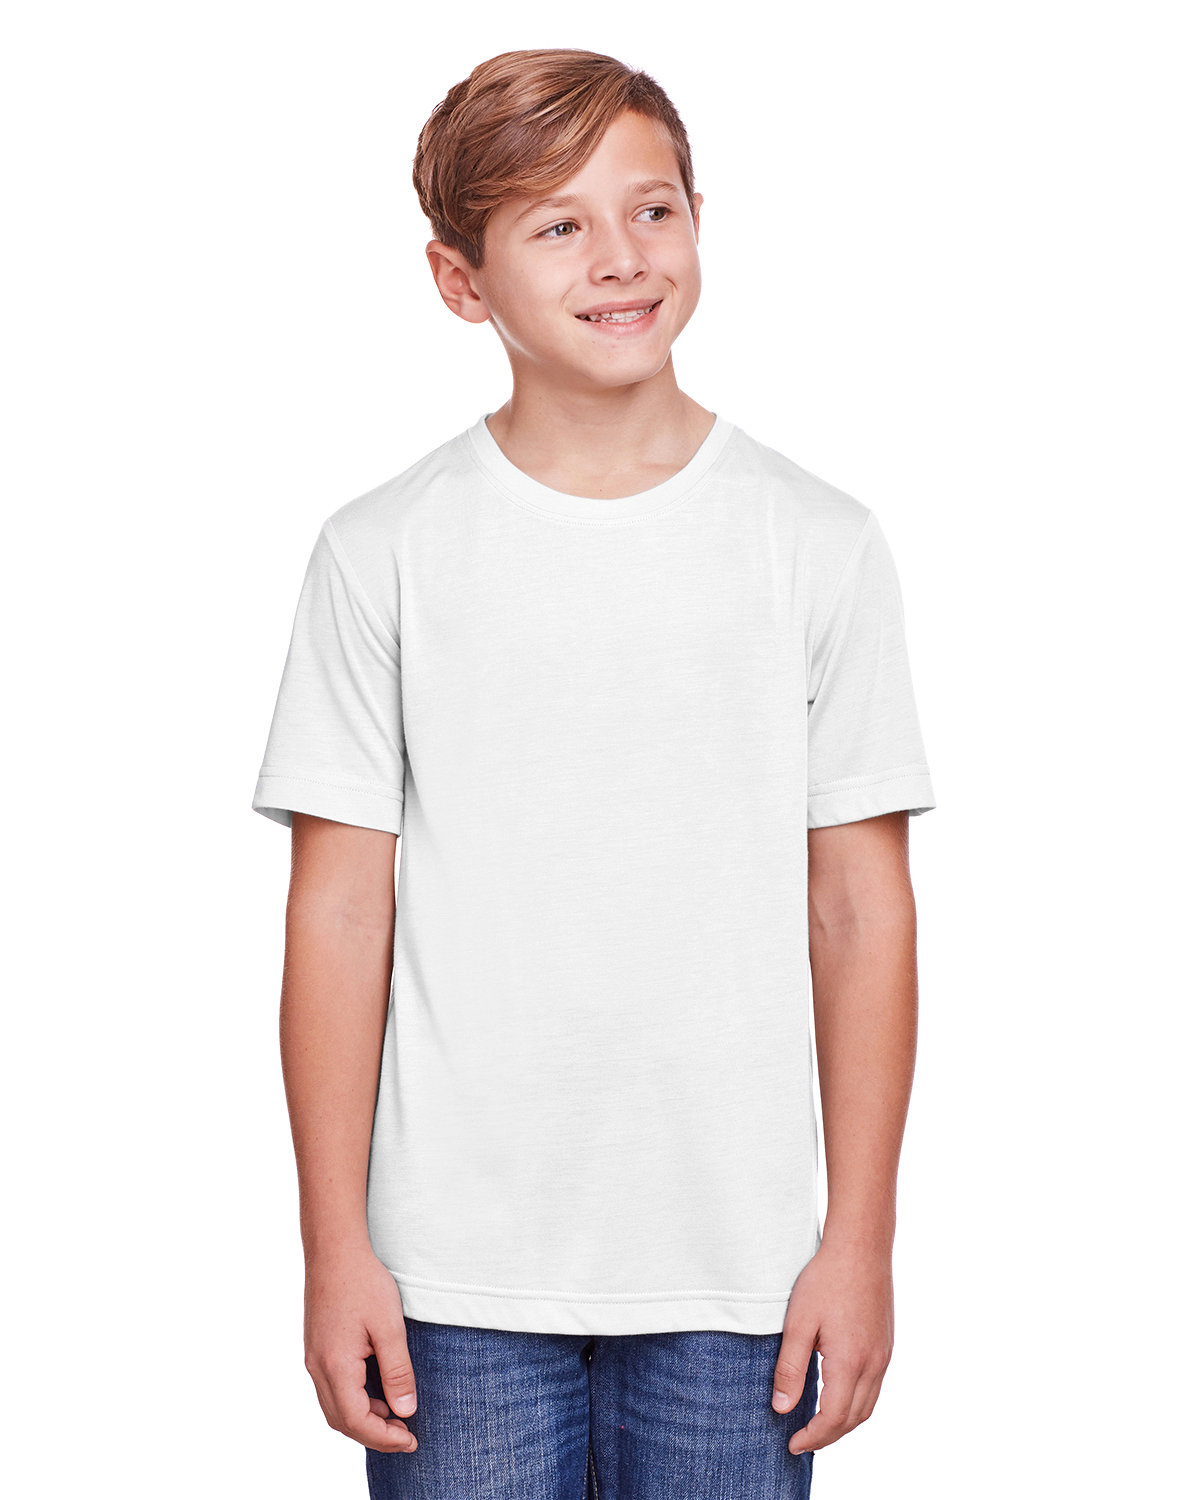 Core 365 Youth Fusion ChromaSoft Performance T-Shirt WHITE 